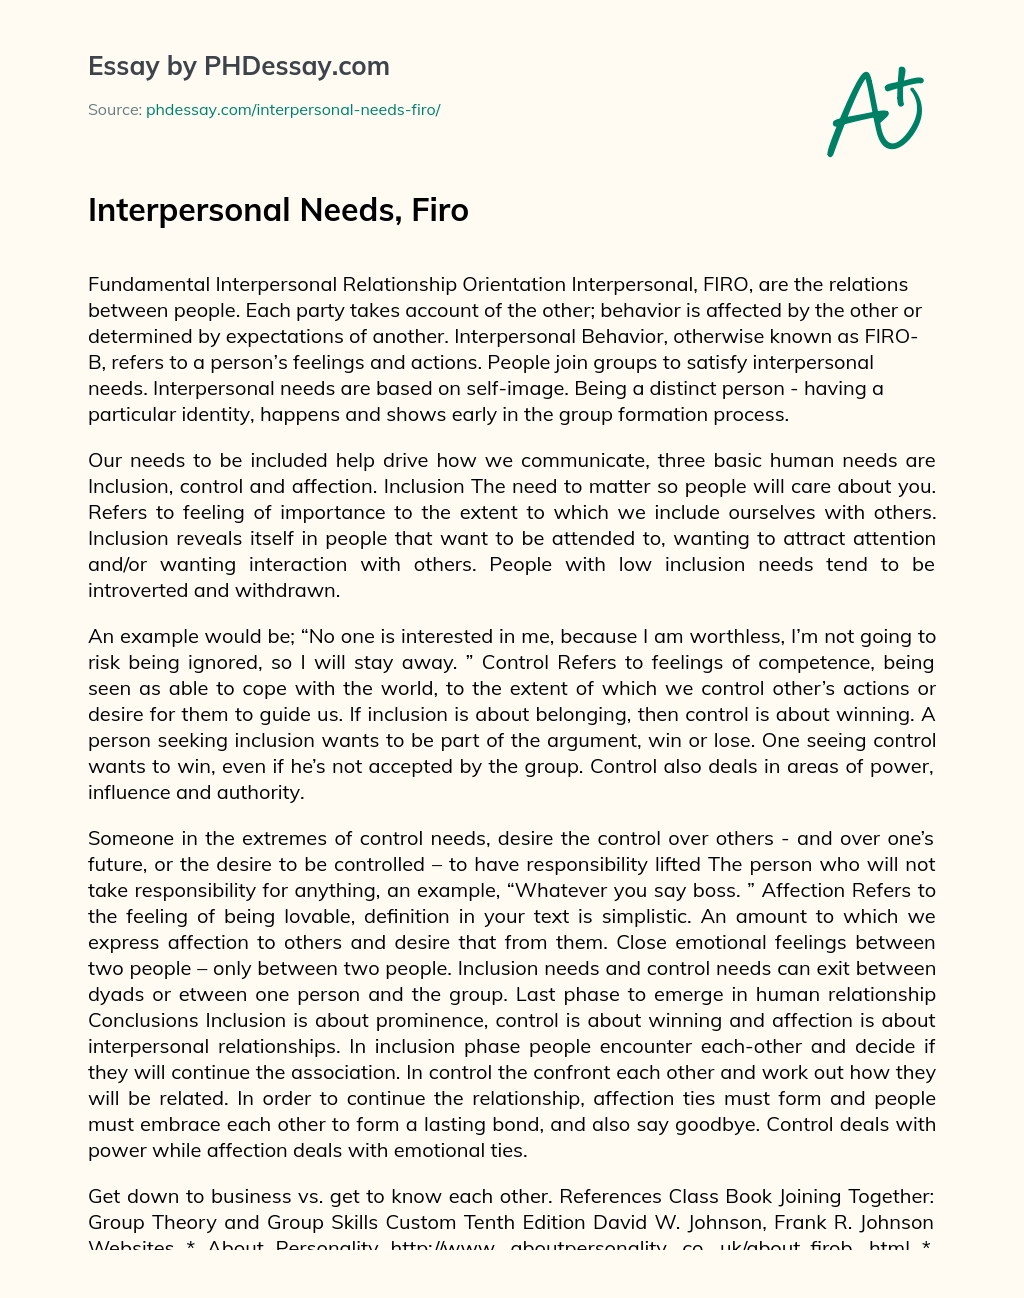 Interpersonal Needs, Firo essay